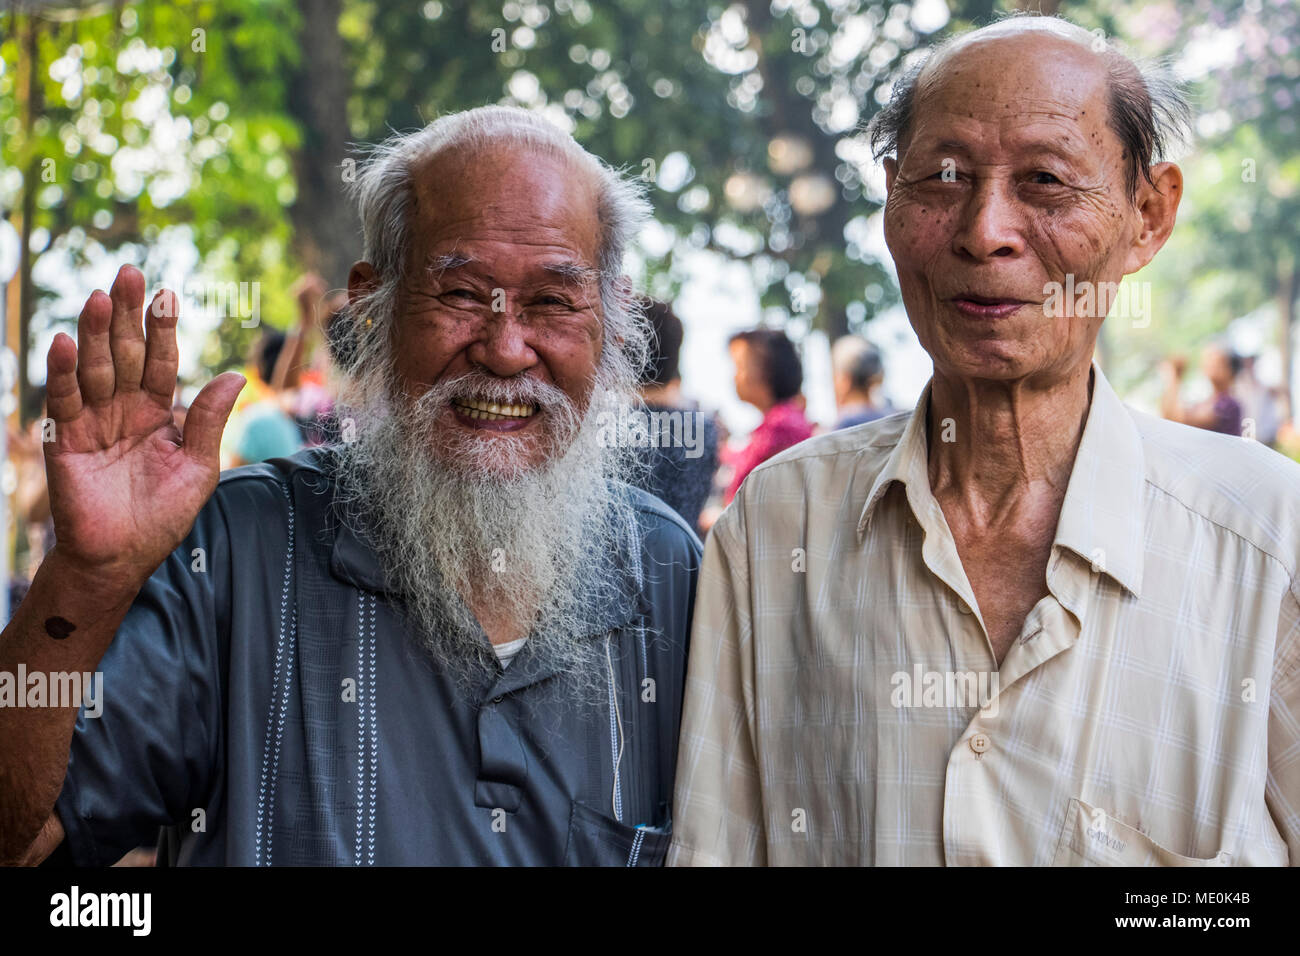 Pose of senior men smiling and waving for the camera; Hanoi, Hanoi, Vietnam Stock Photo